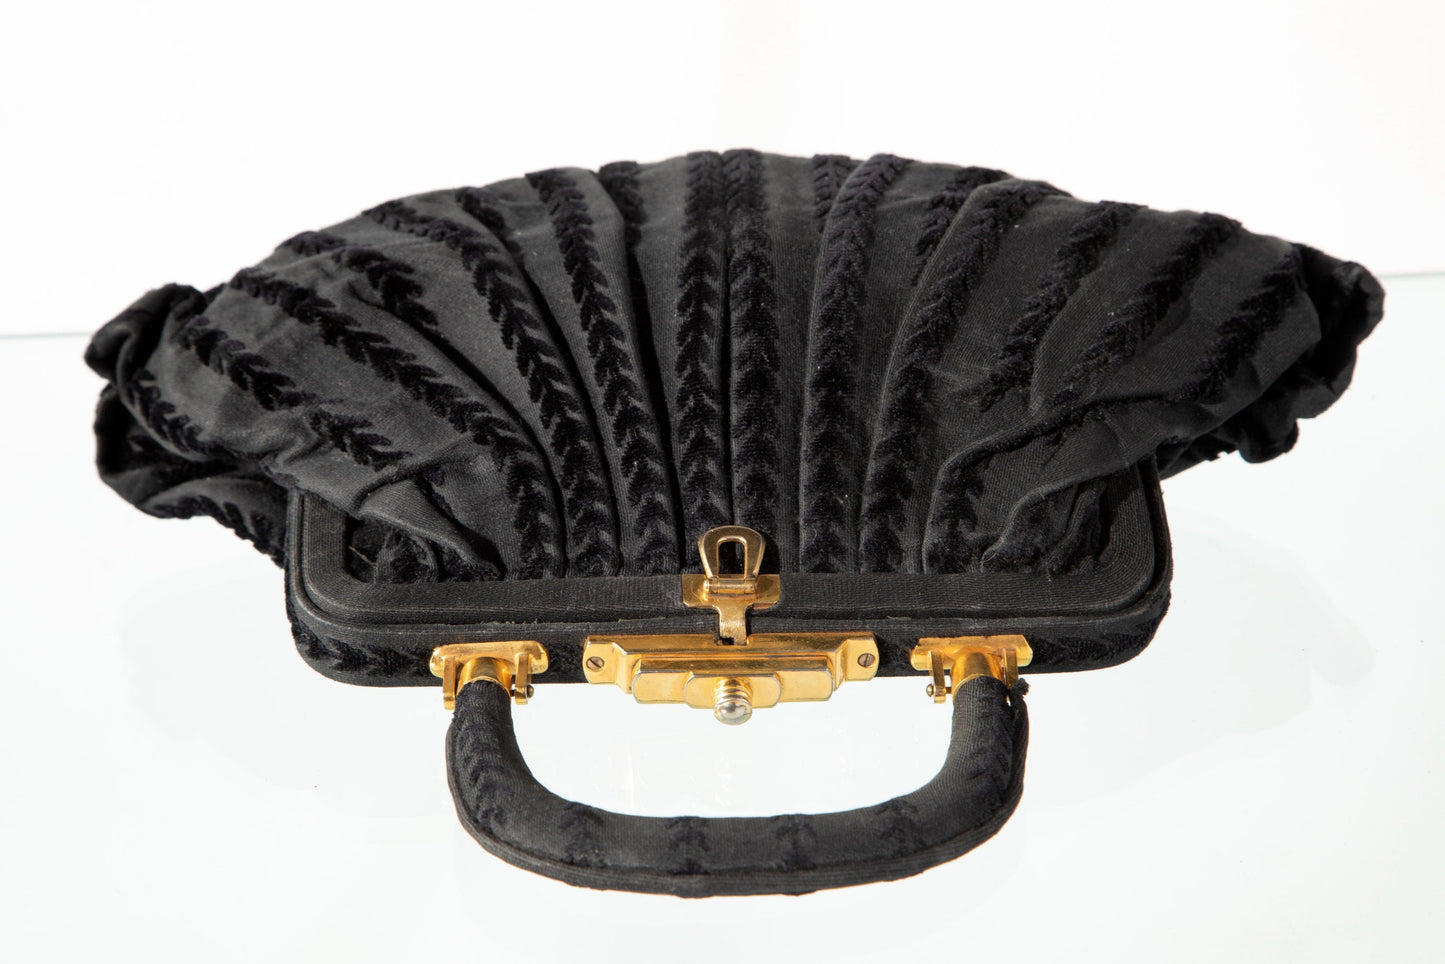 Roberta Di Camerino black dévoré velvet handbag